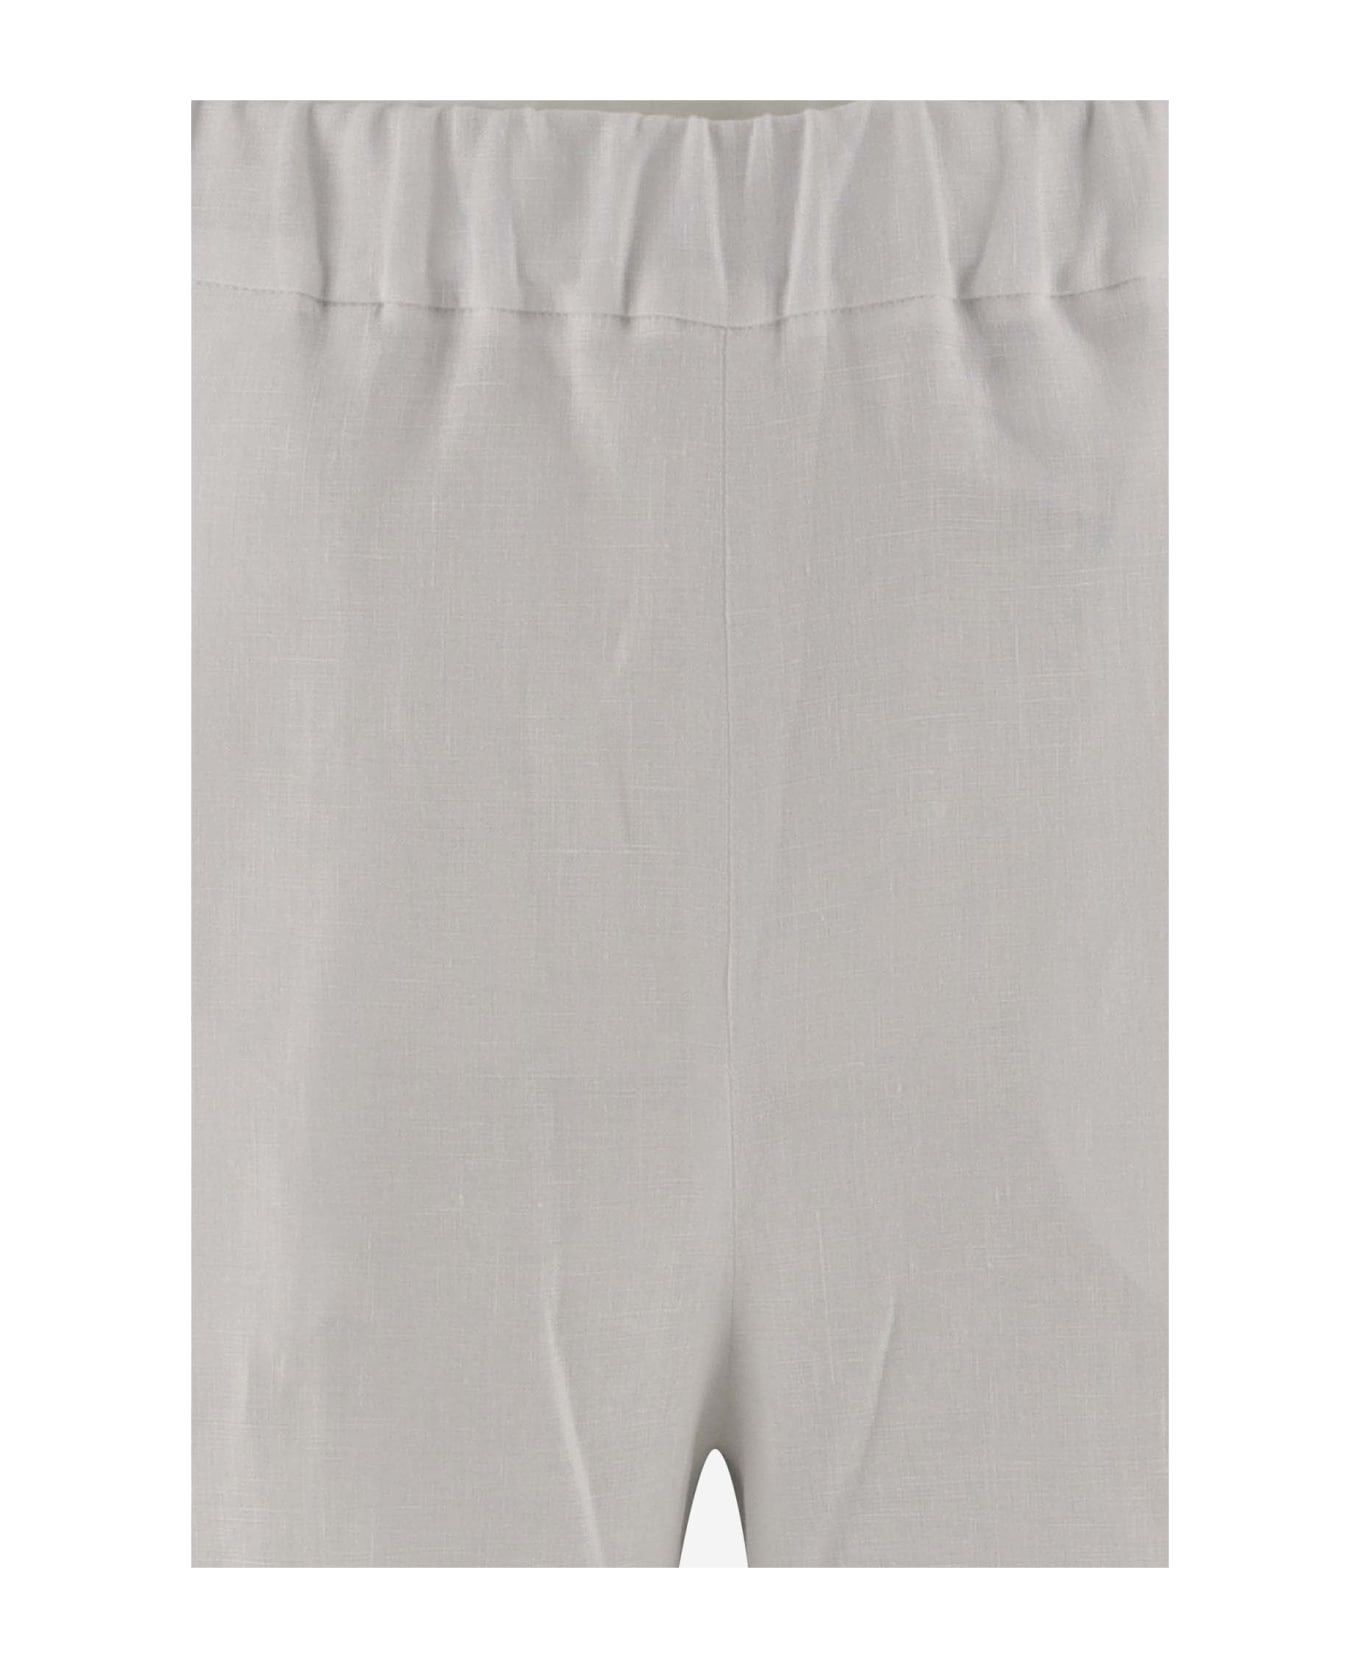 QL2 Straight-leg Linen Pants - White